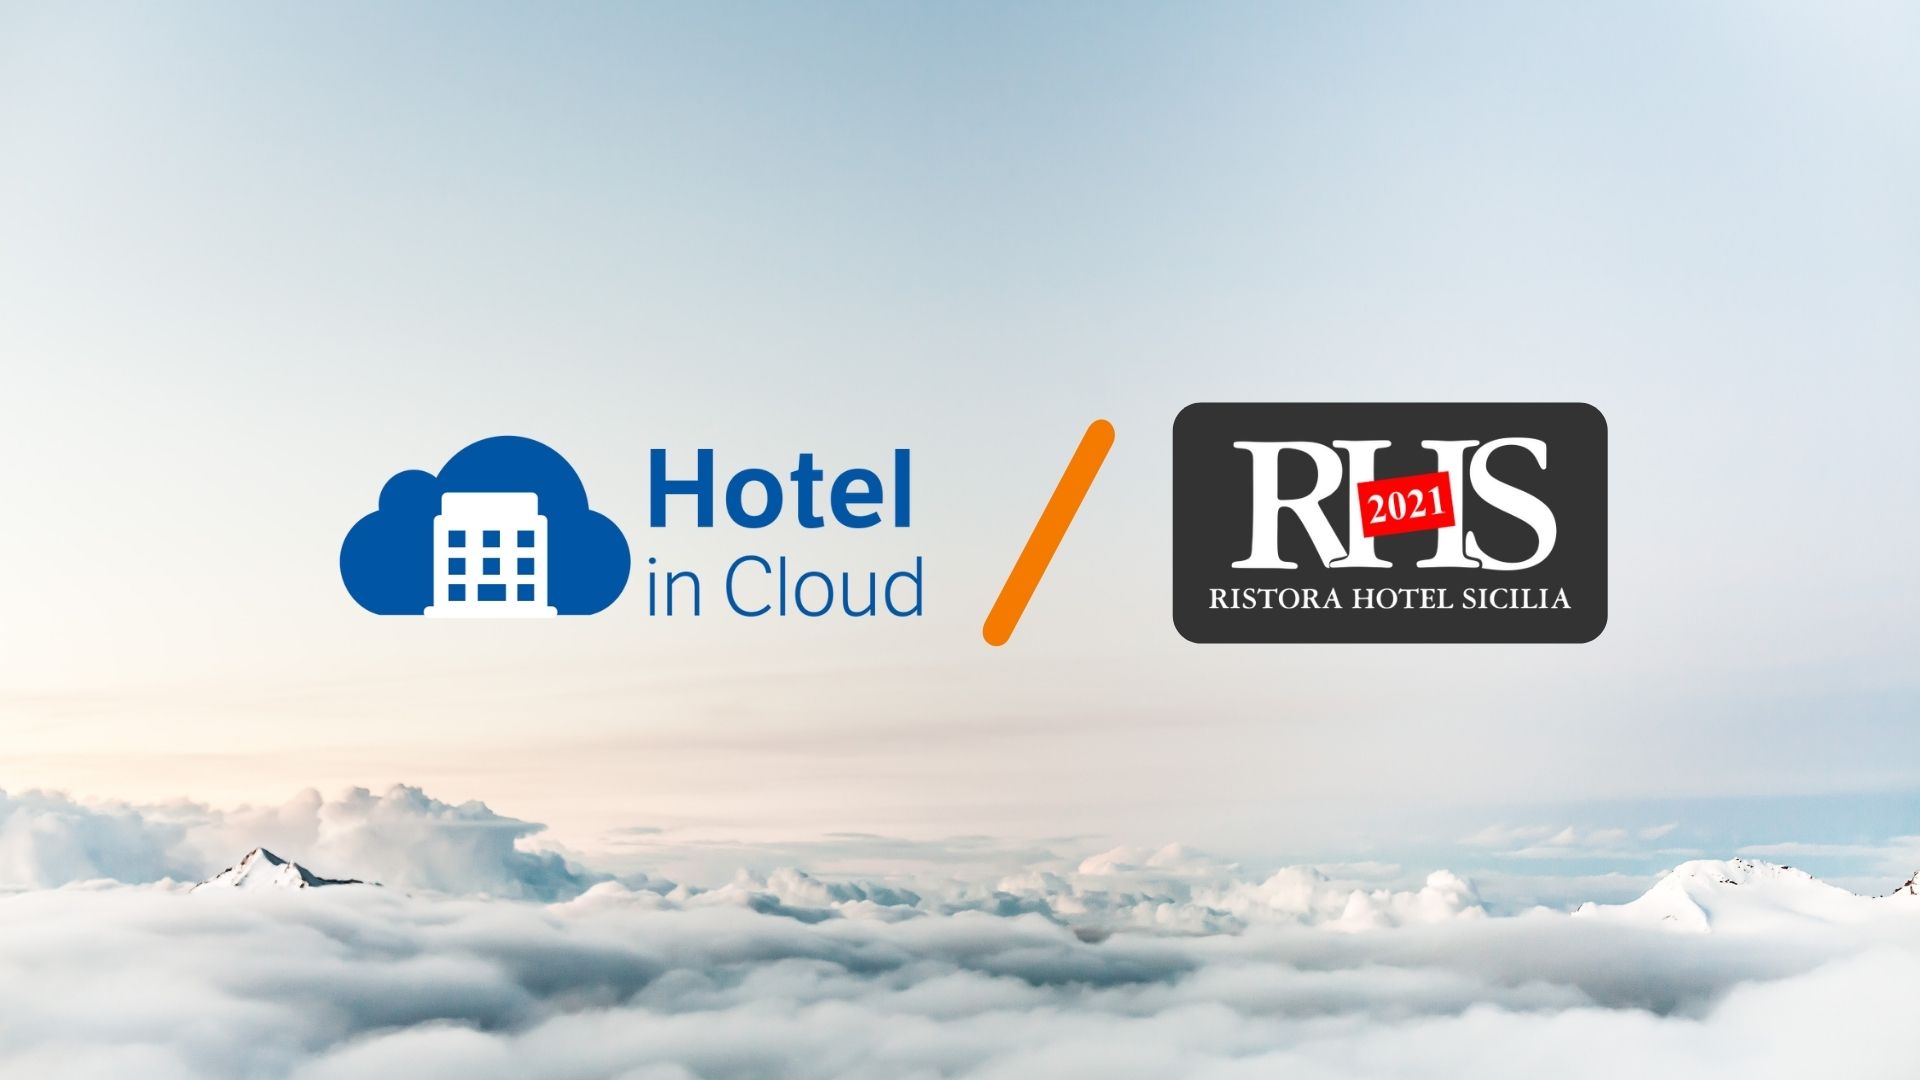 Hotel in cloud al RHS ristora hotel sicilia 2021